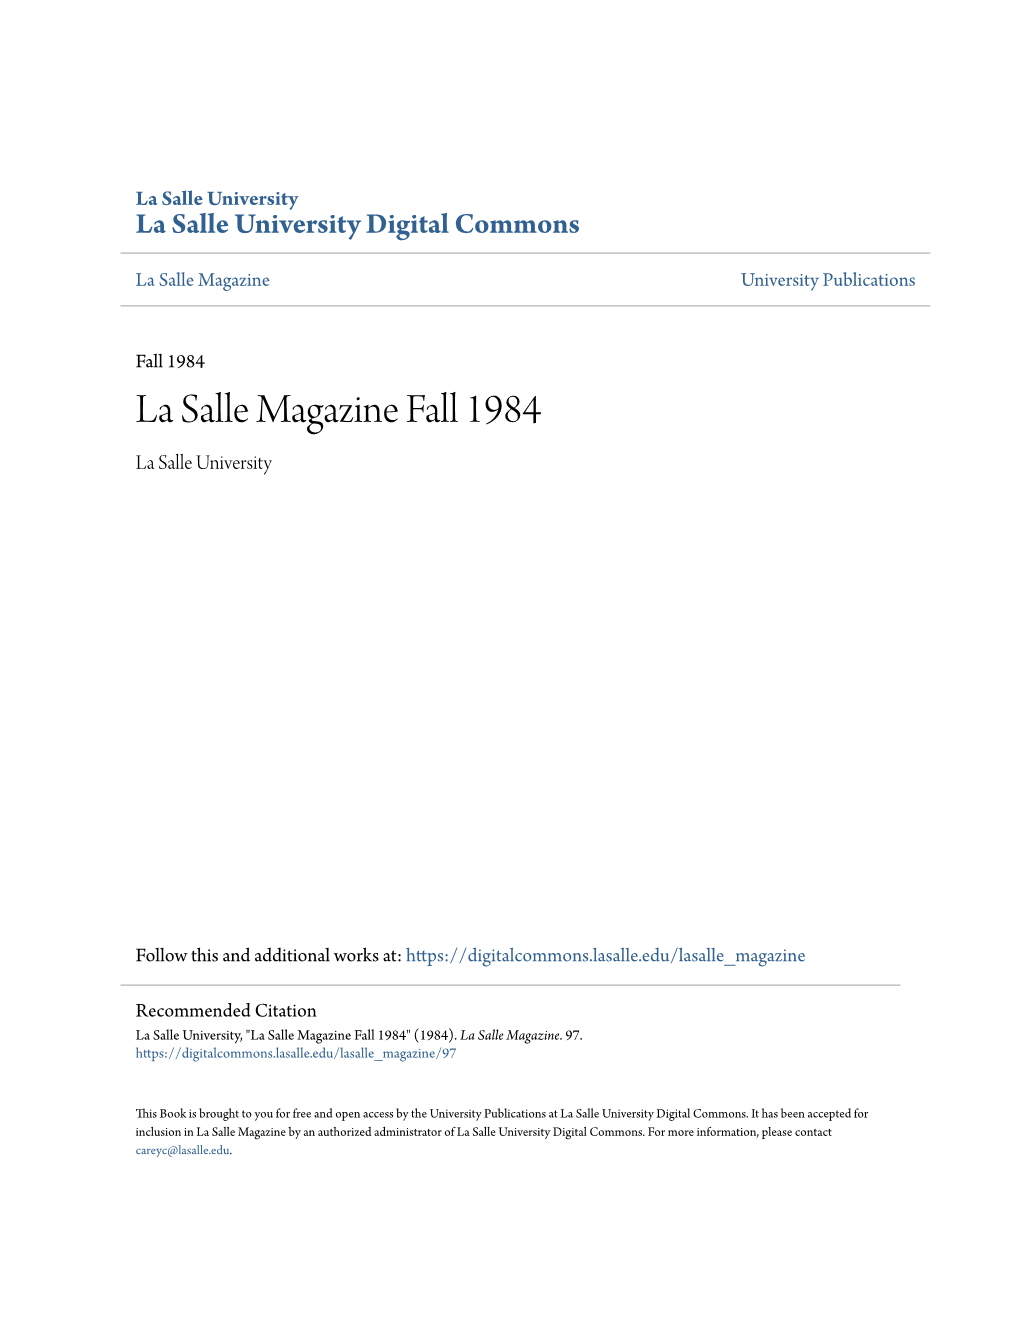 La Salle Magazine Fall 1984 La Salle University